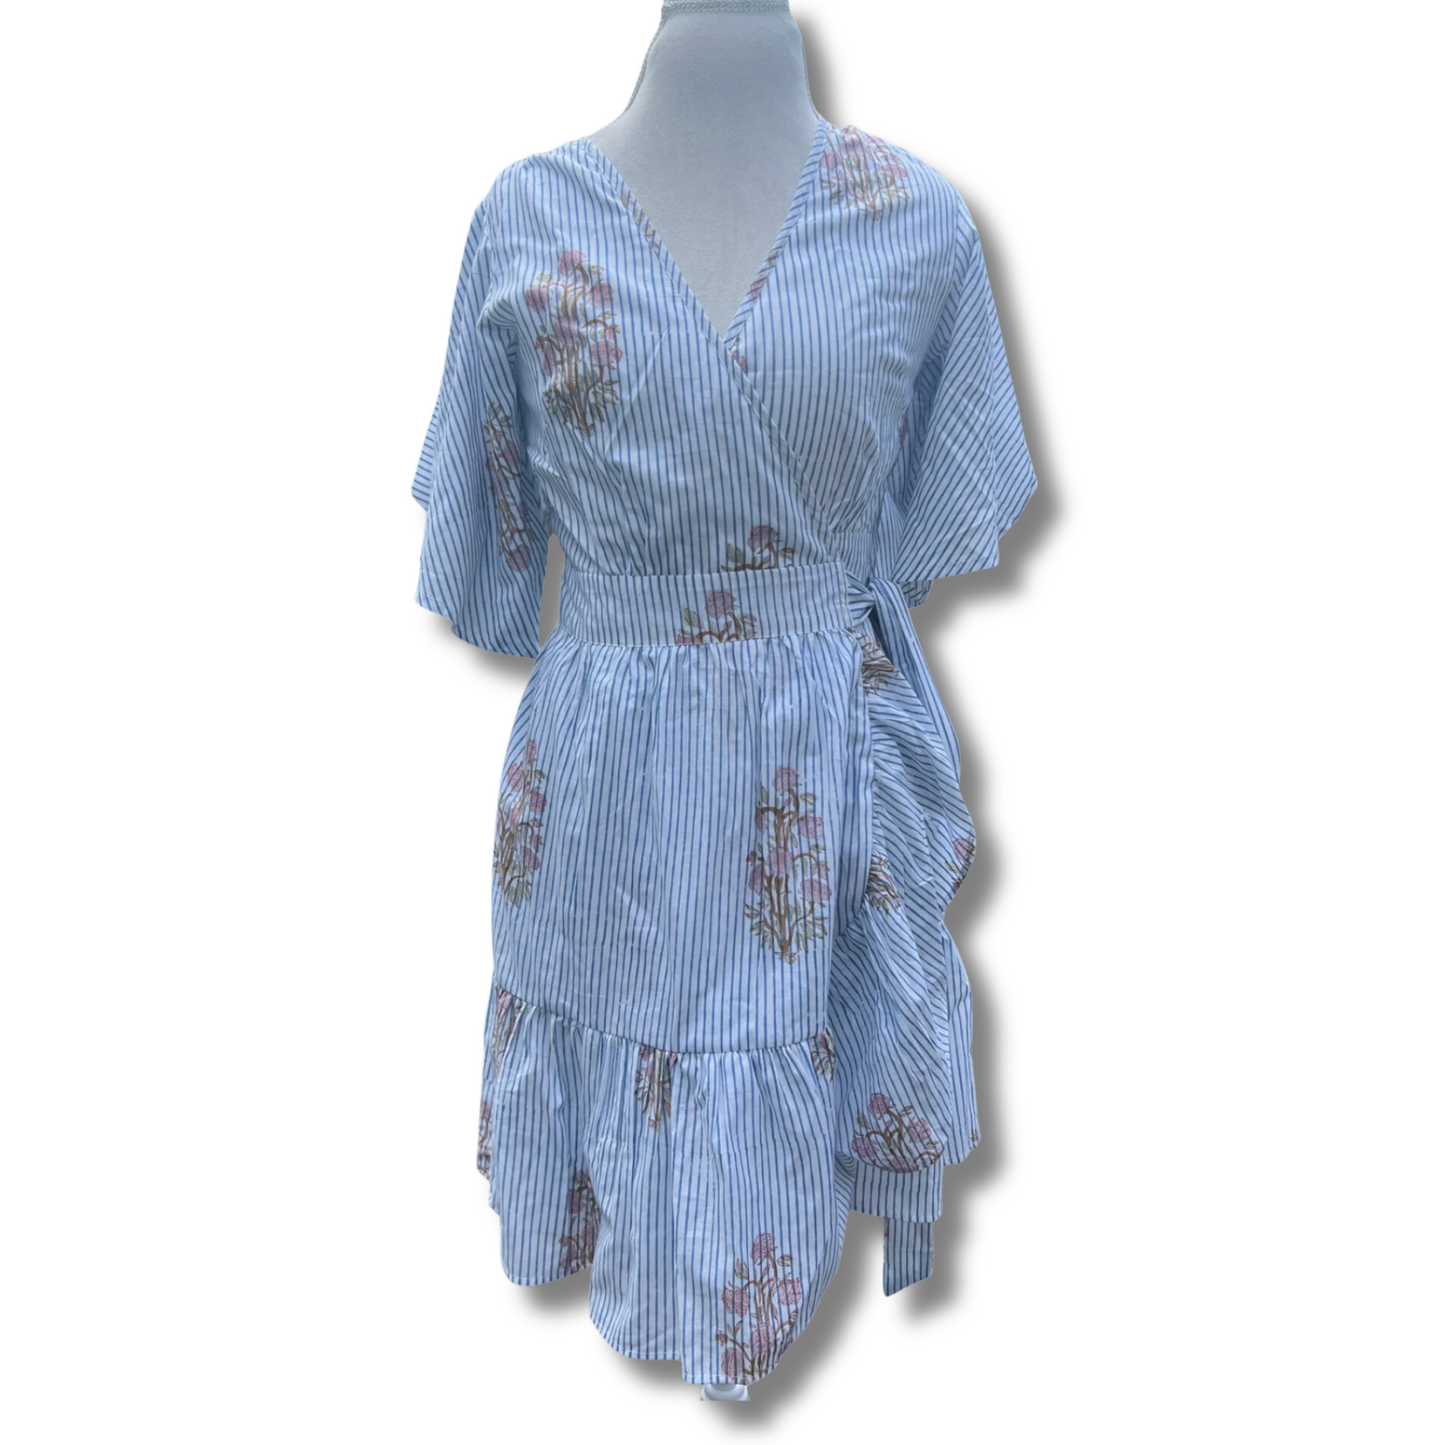 Samantha Wrap Dress, Vintage Floral Stripes